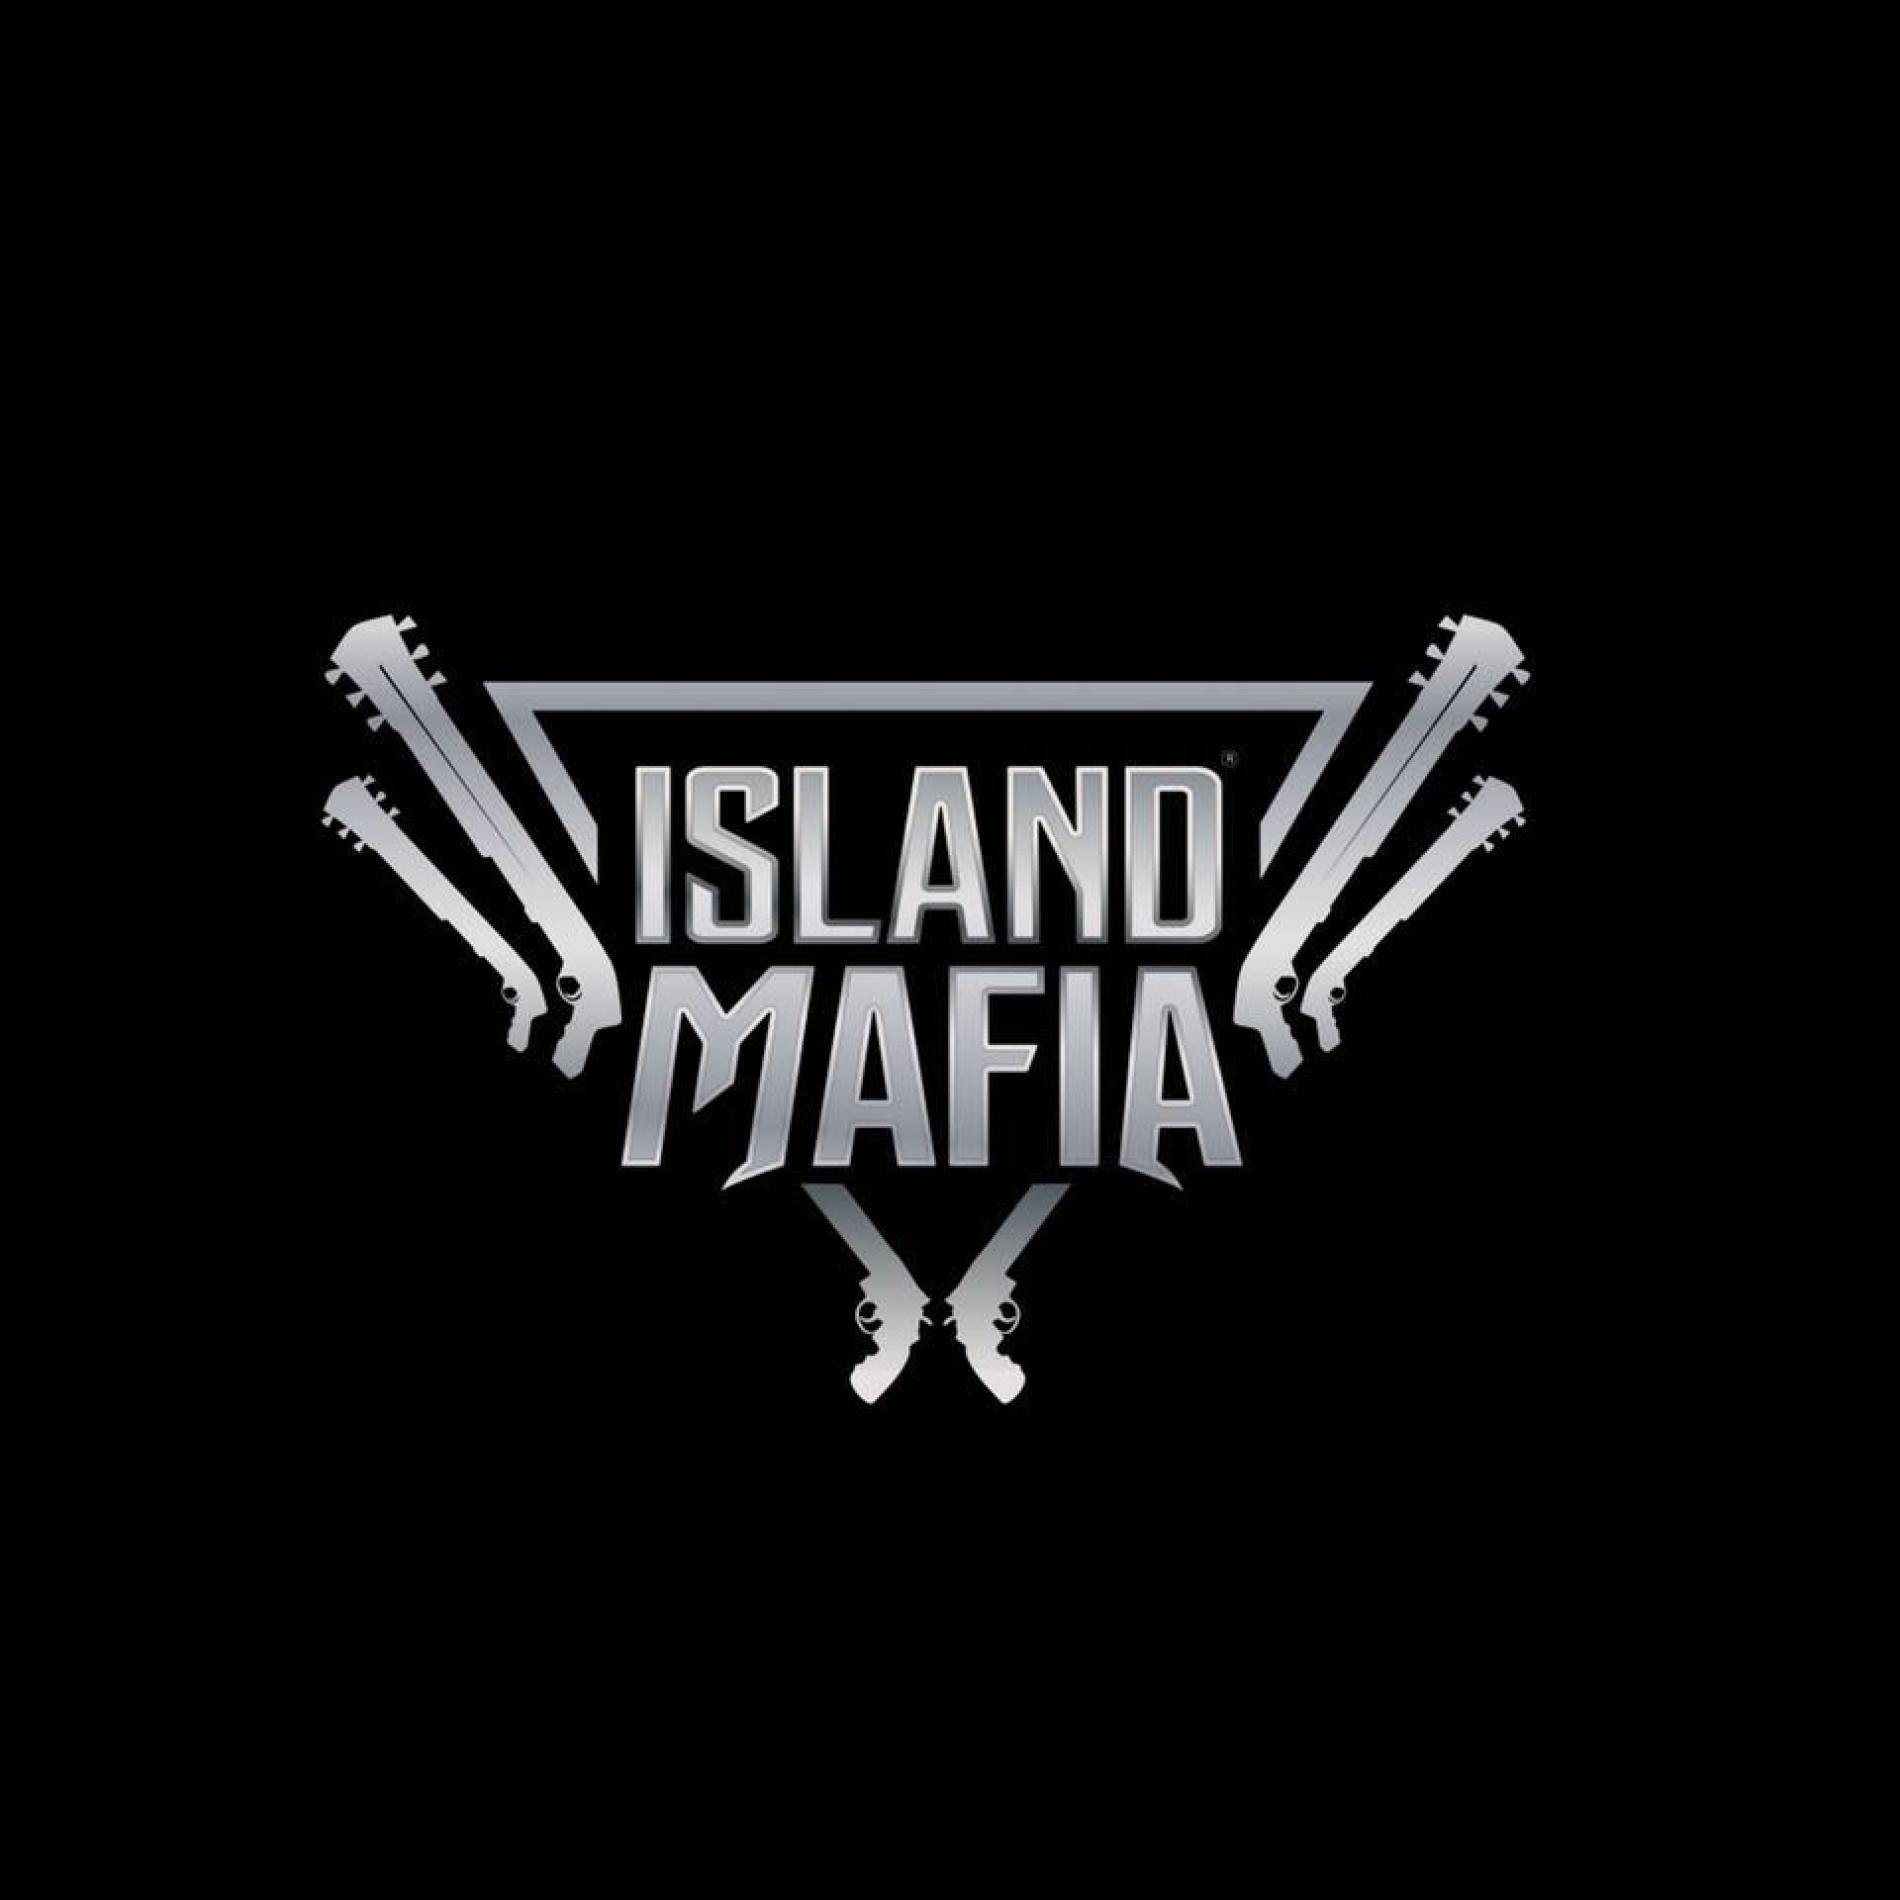 Island Mafia Have A Pretty Big First Release Comin Up!